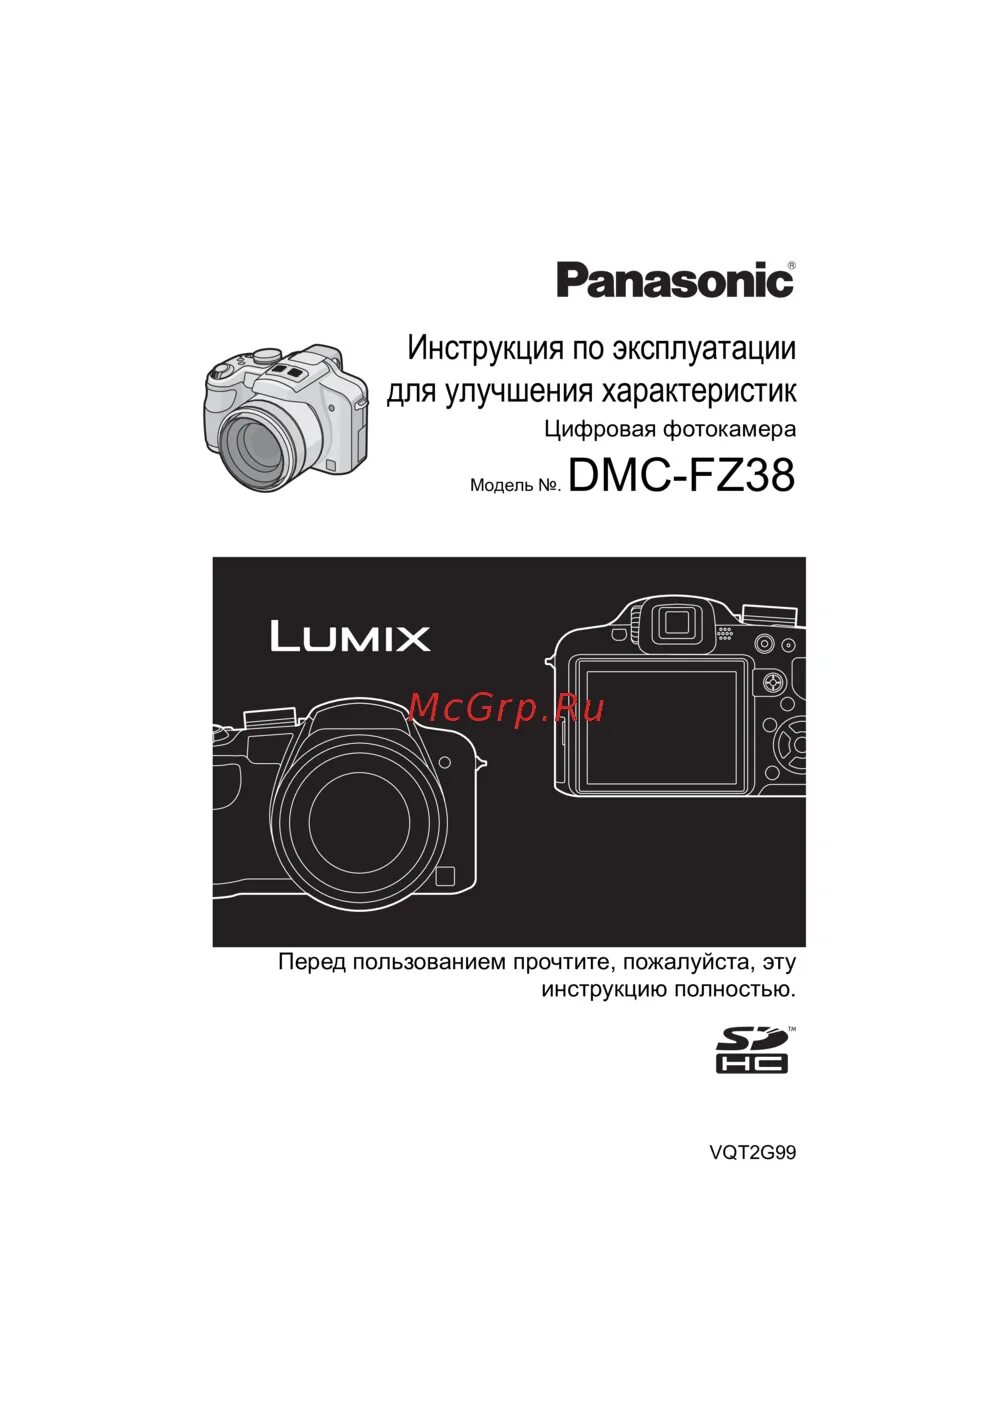 Инструкция panasonic dmc. Фотоаппарат Panasonic DMC-fz38. Panasonic fz38 Lumix. Panasonic DMC fz38 Выдержка. Panasonic DMC fz38 шнур.